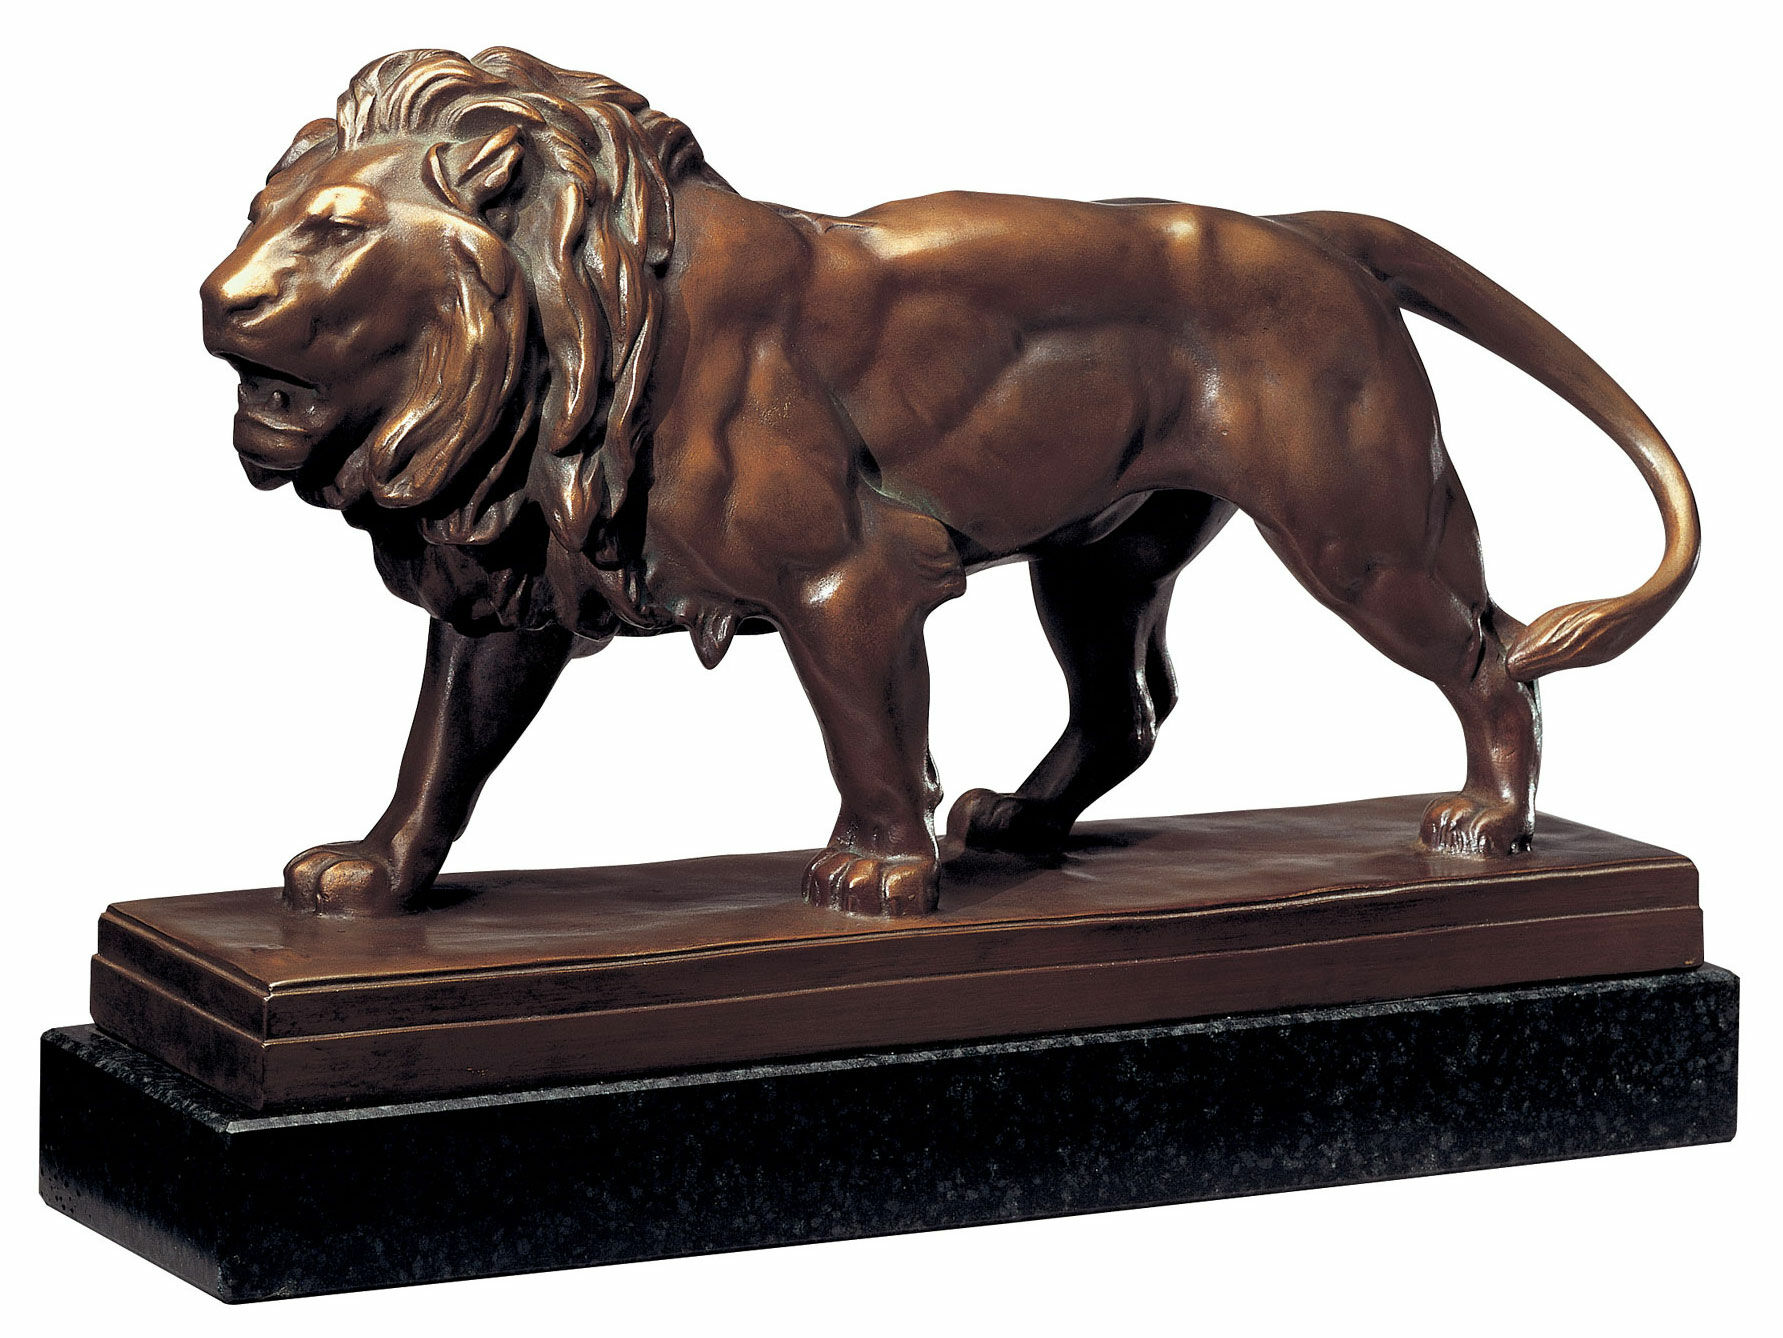 Skulptur "Angribende løve", bundet bronze von Antoine-Louis Barye